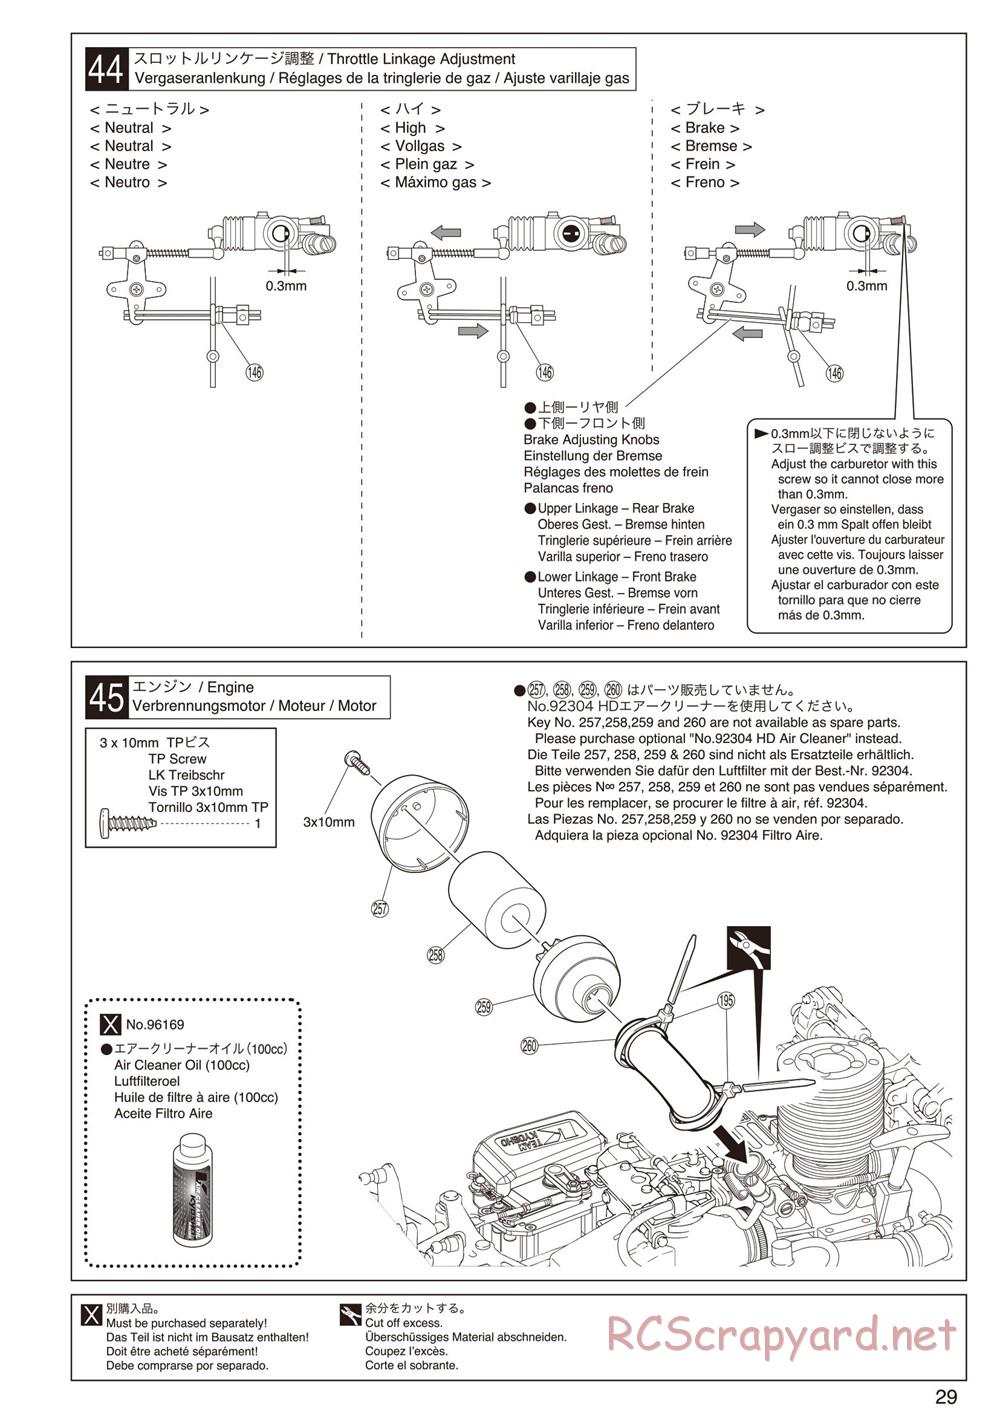 Kyosho - Inferno NEO ST Race Spec - Manual - Page 29